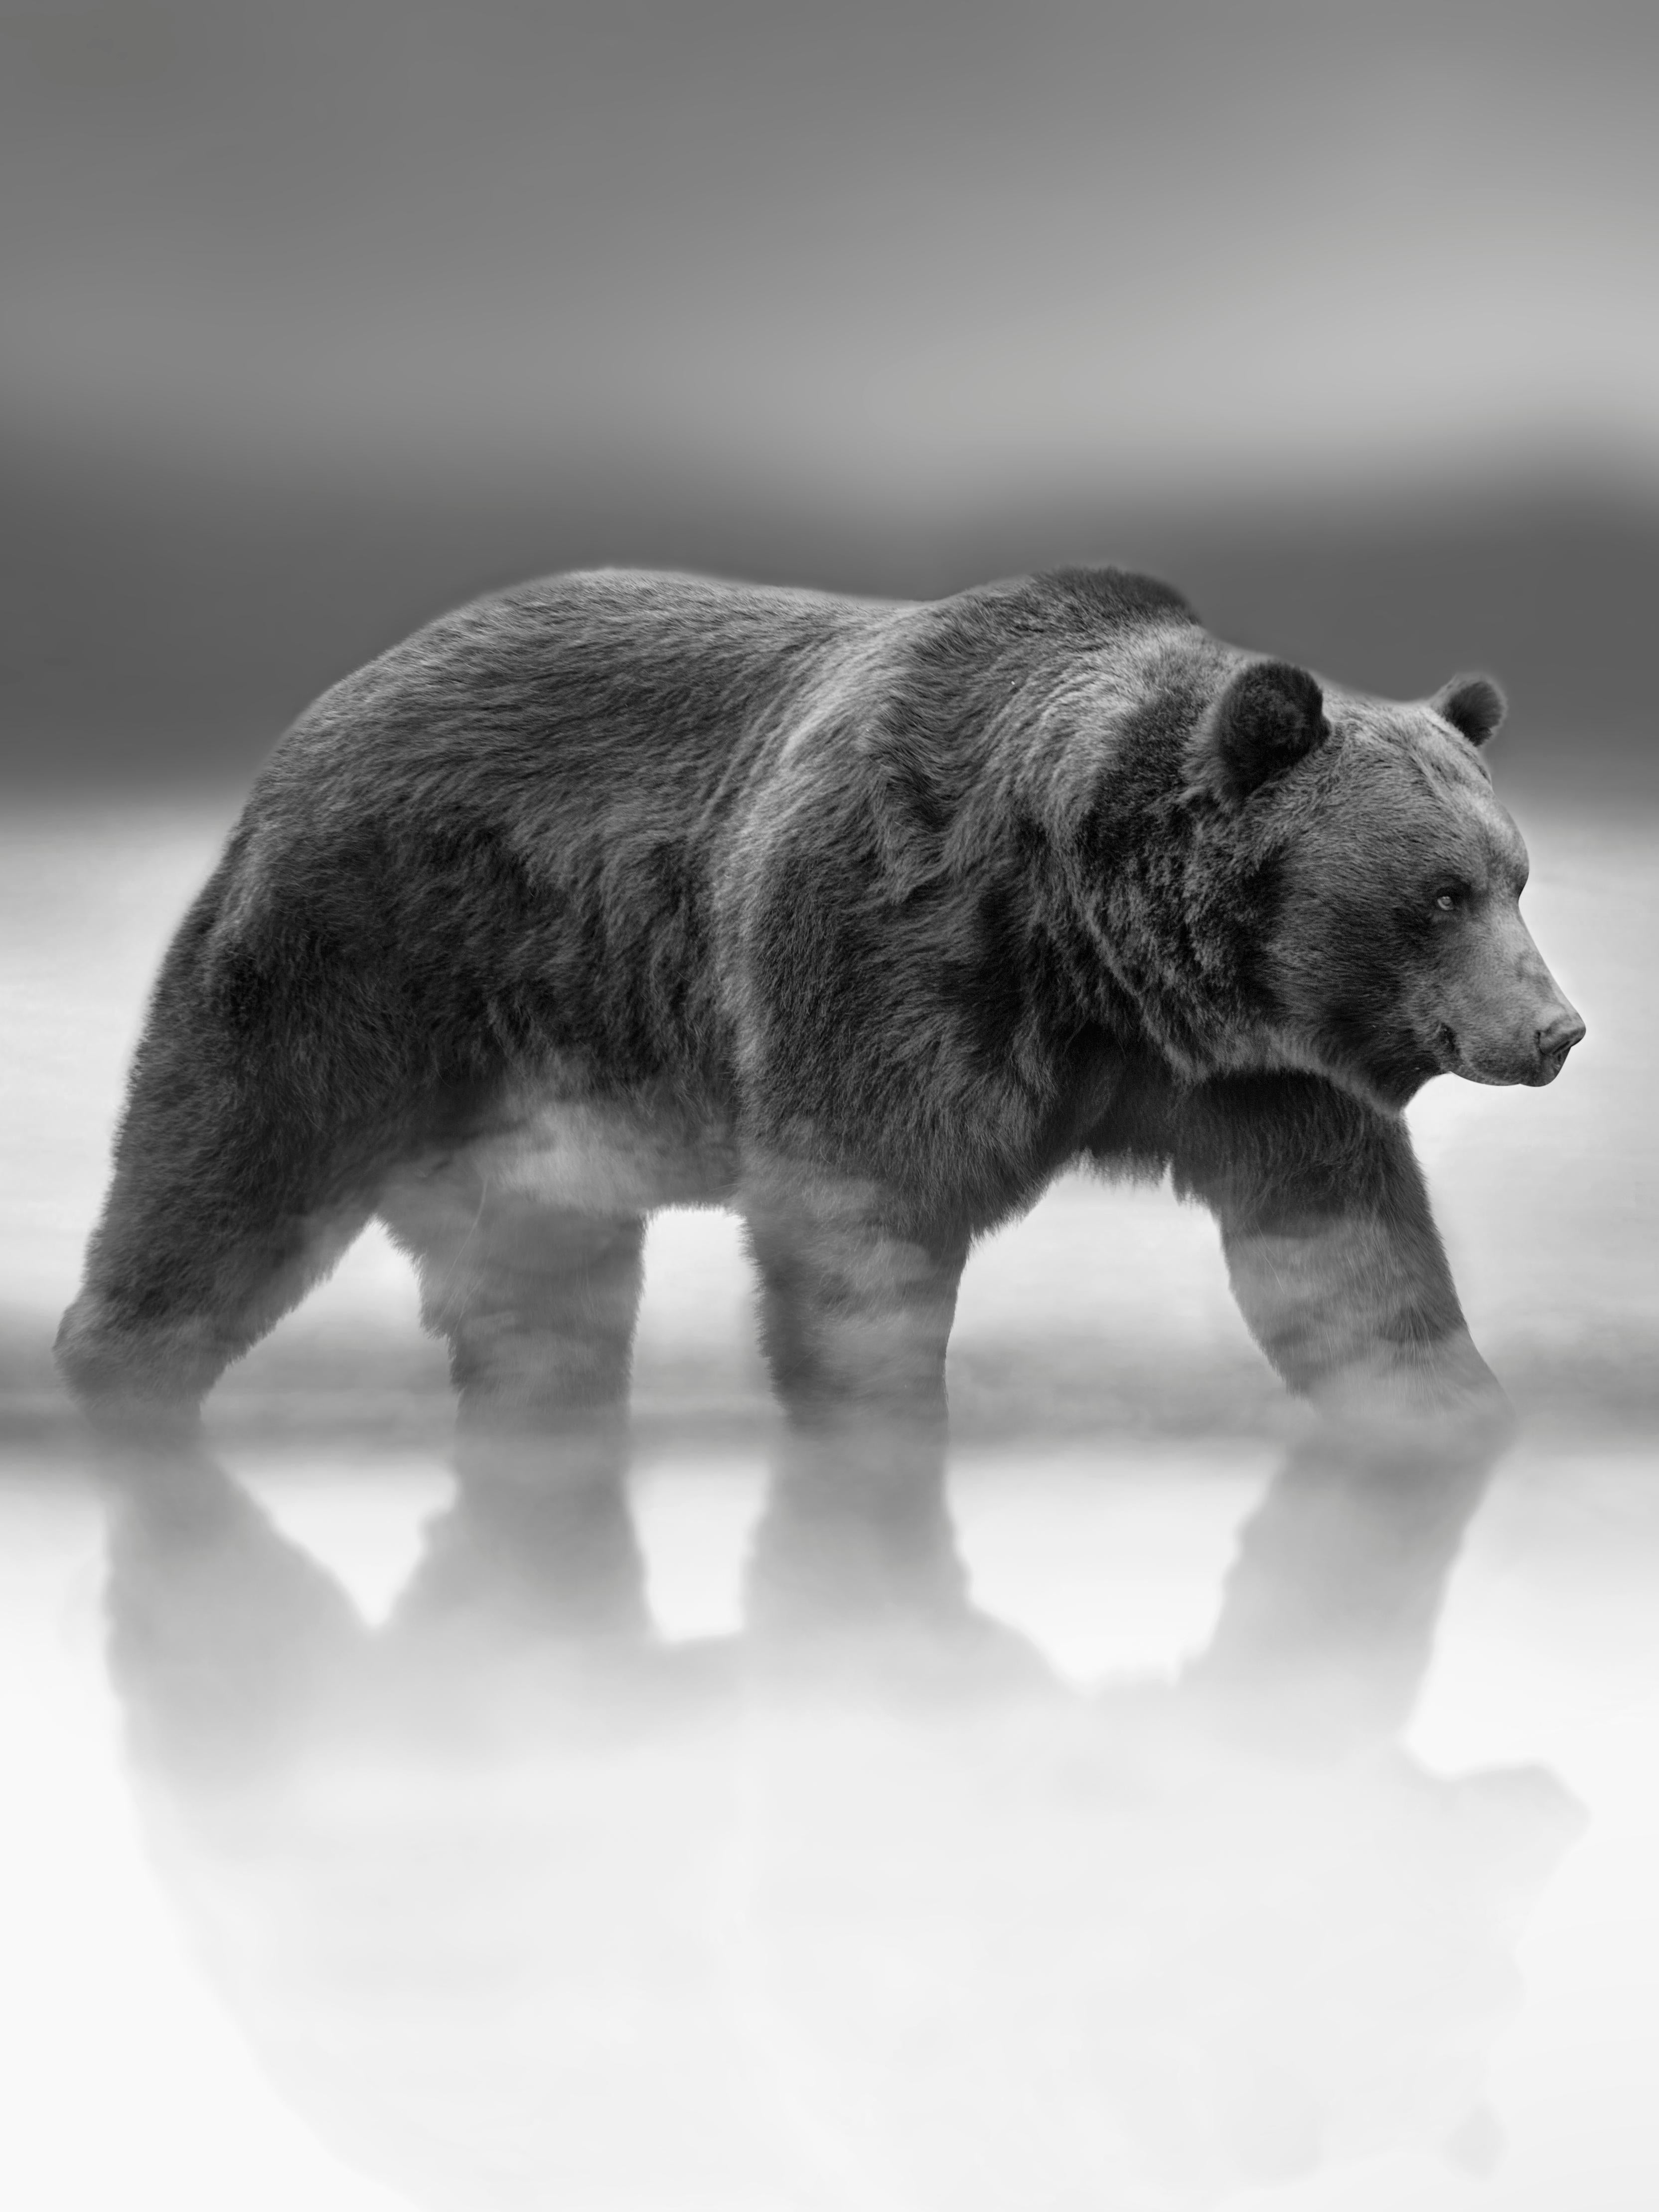 Shane Russeck Animal Print -  "Reflections" Black & White Bear Photograph, 36x48 Photography, Kodiak, Grizzly